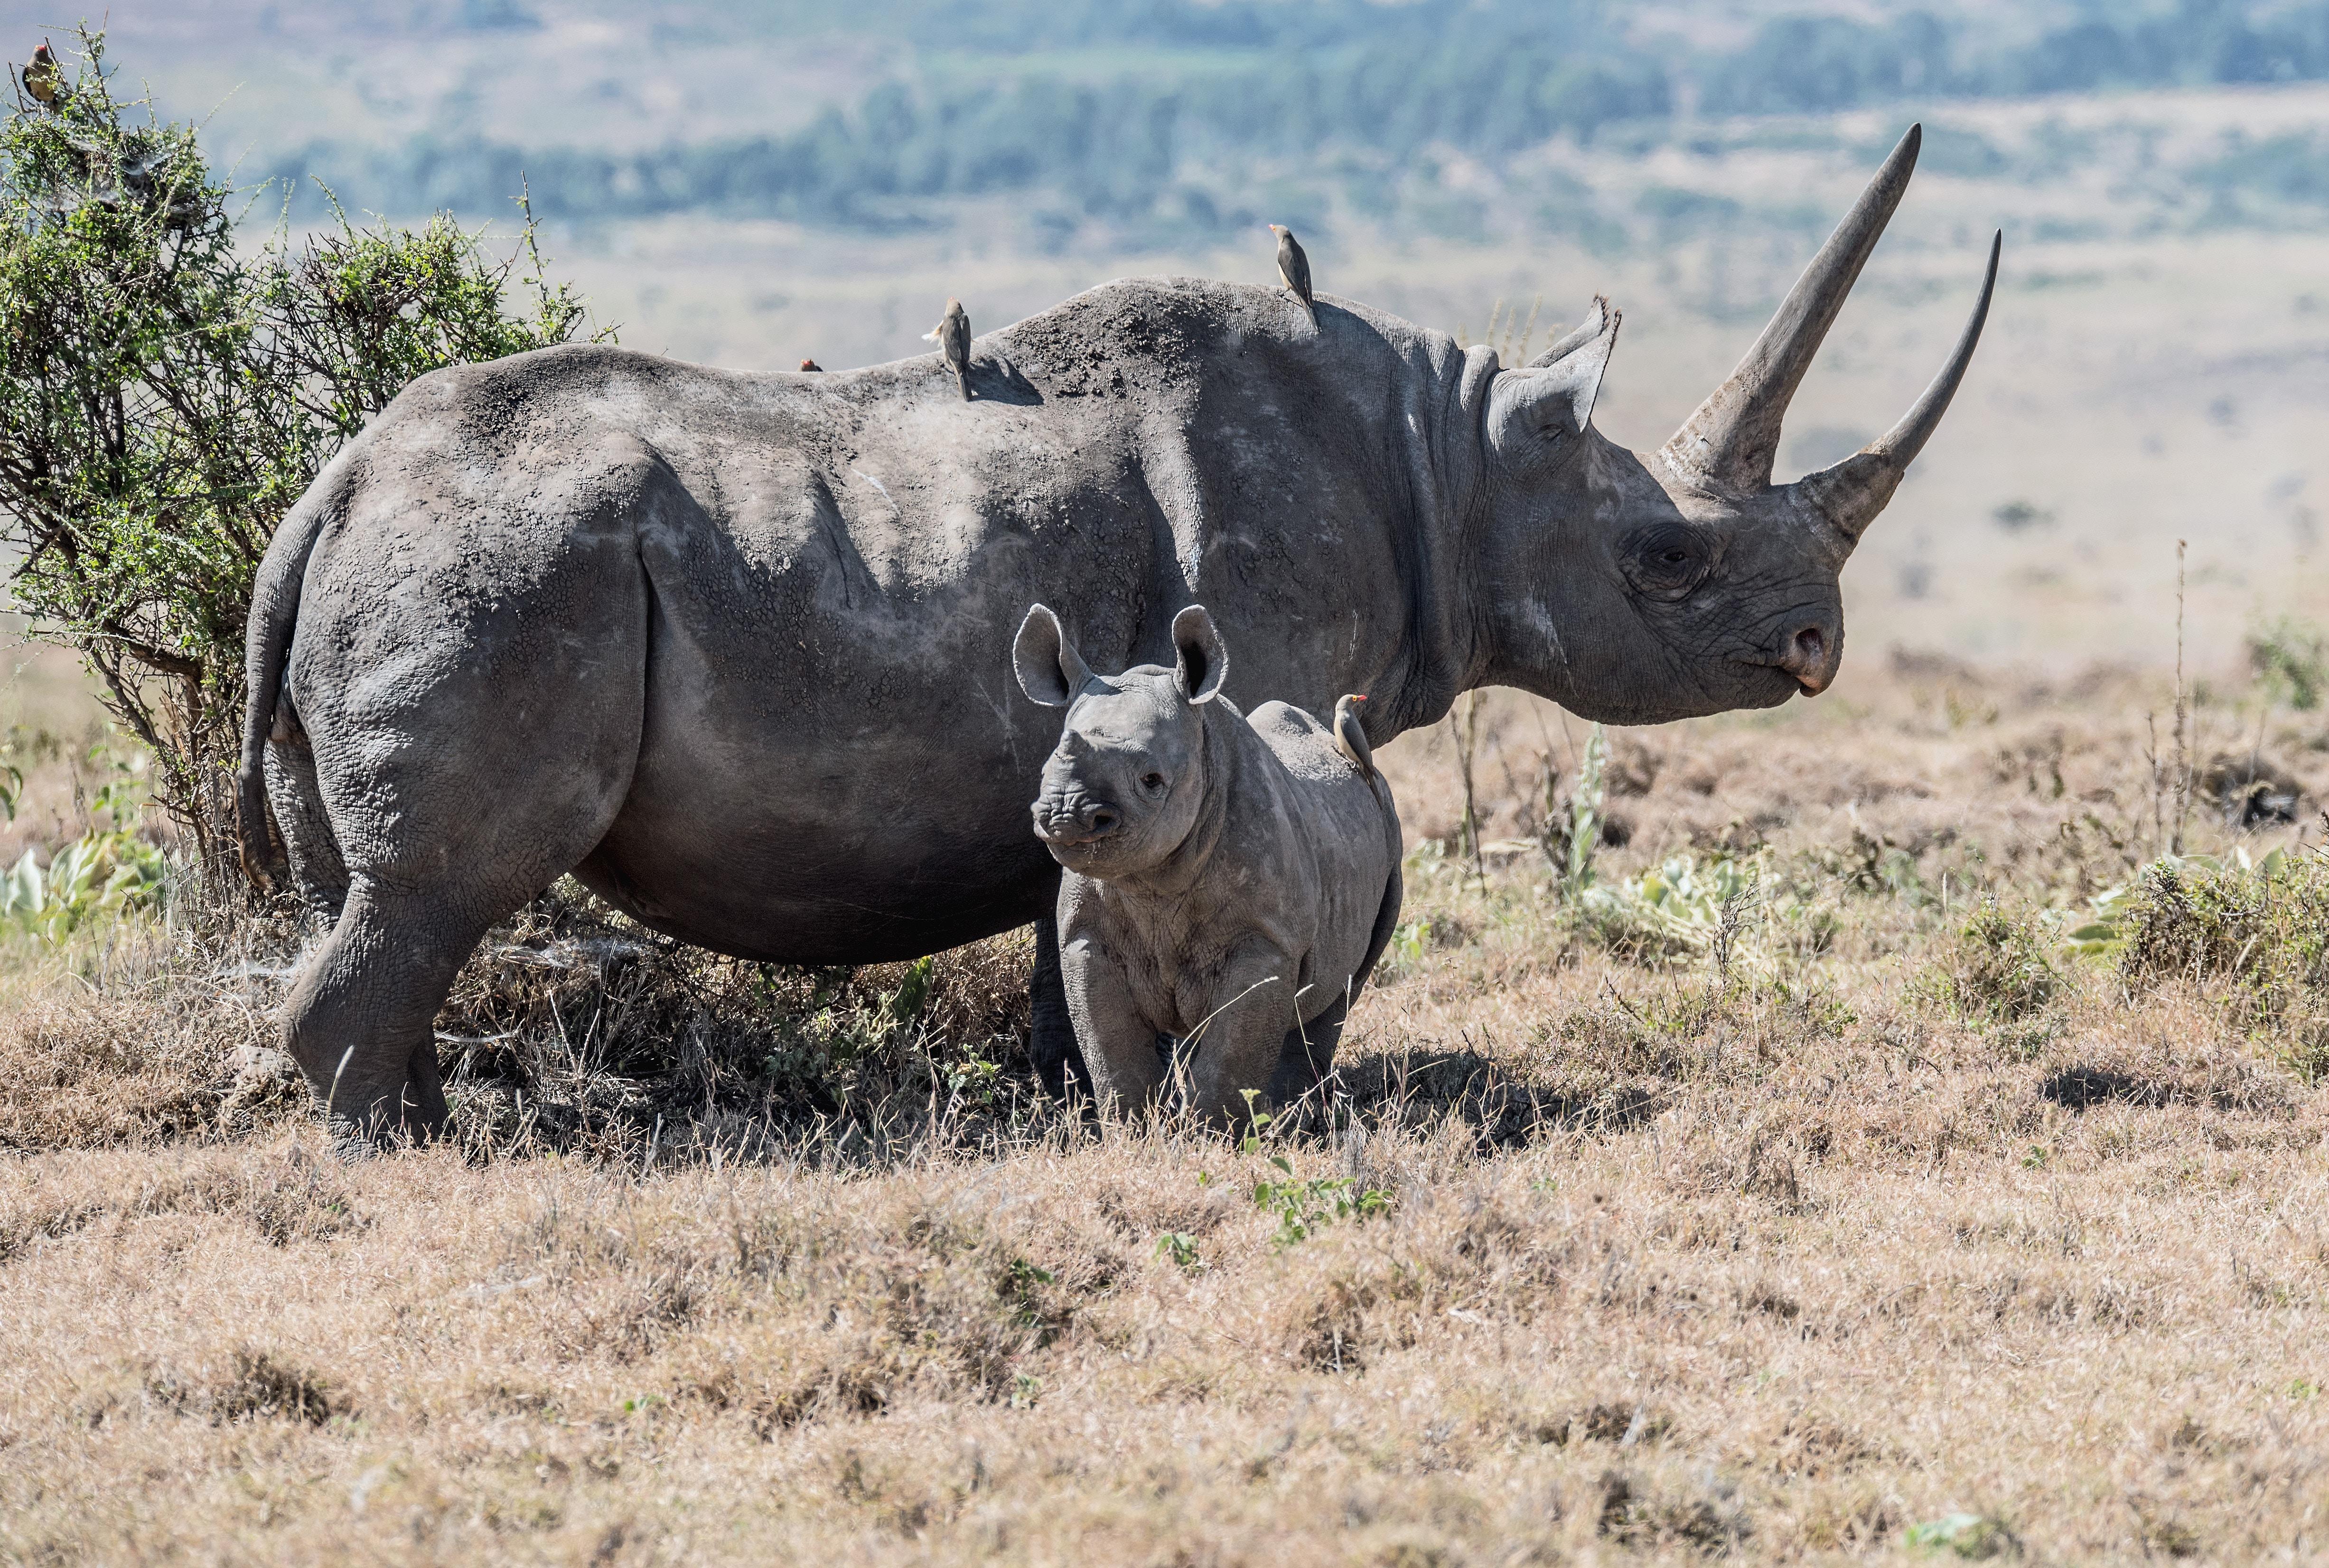 Black Rhino Picture. Download Free Image